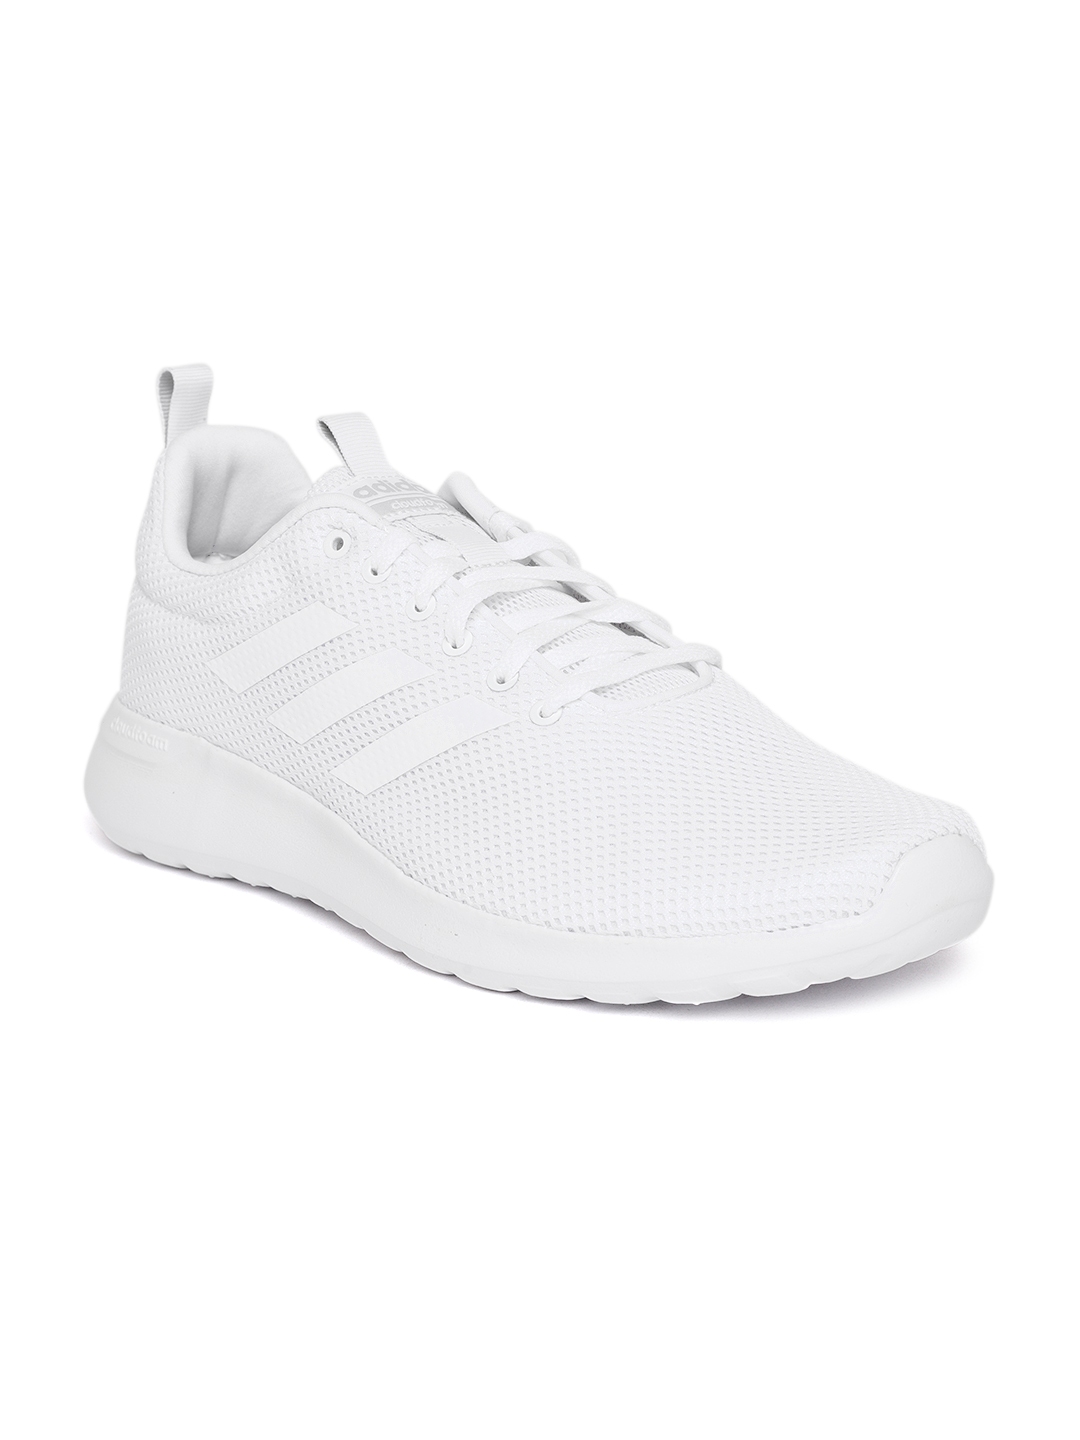 Buy Adidas Men White Lite Racer CLN Running Shoes - Sports Shoes for Men 6841728 | Myntra